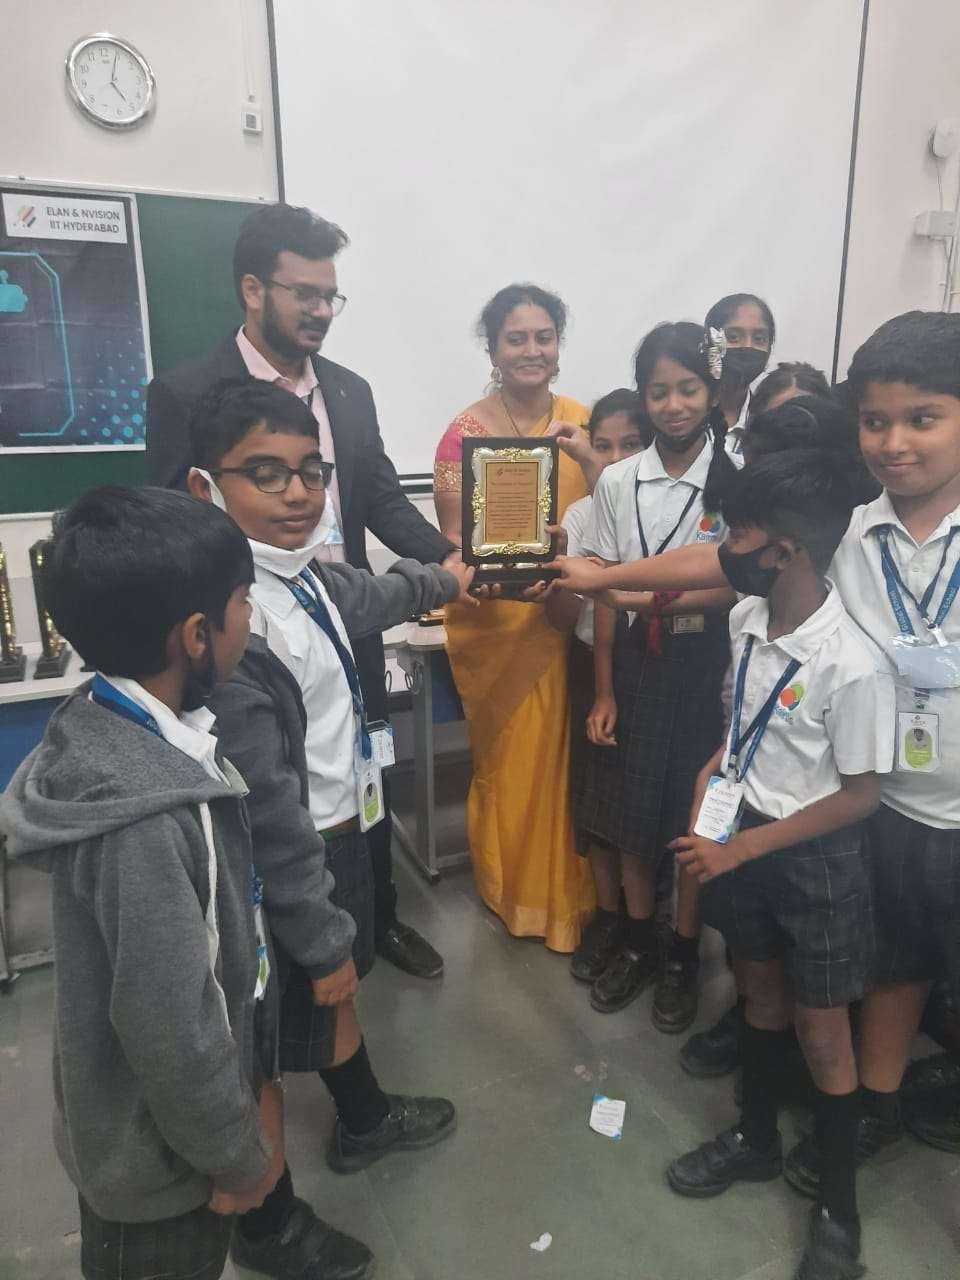 Appreciation award to the School & School Principal M. Sri Lakshmi